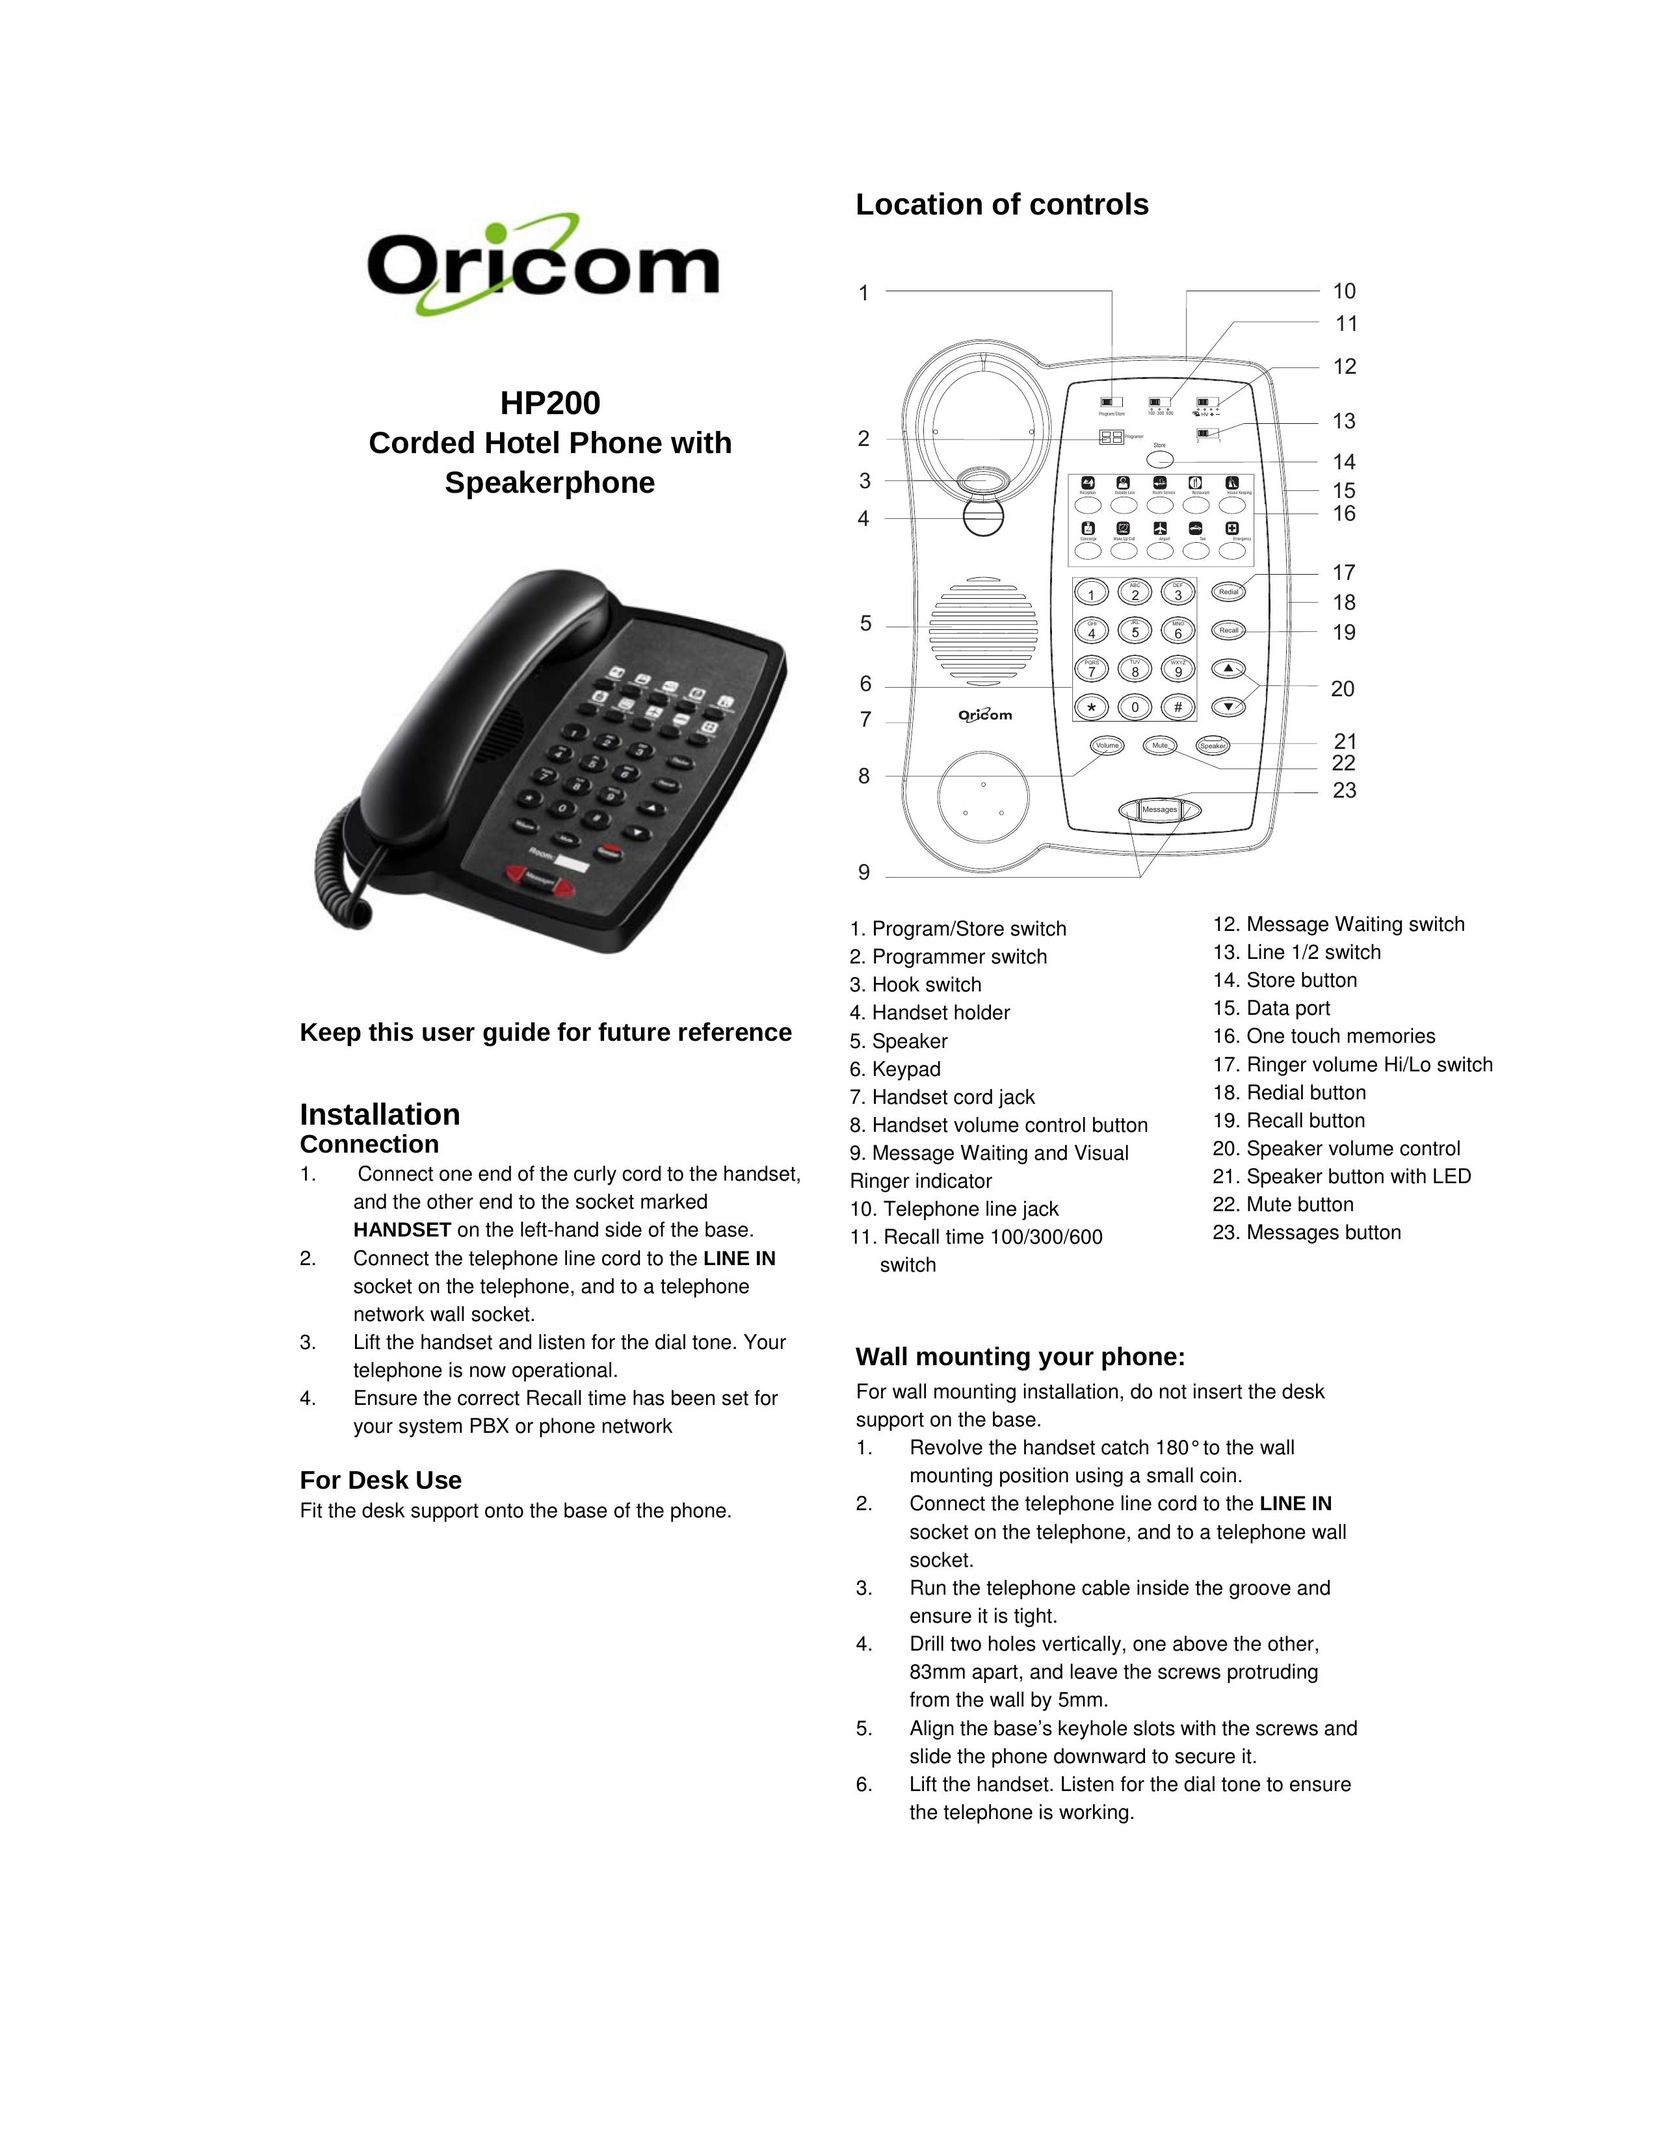 Oricom HP200 Telephone User Manual